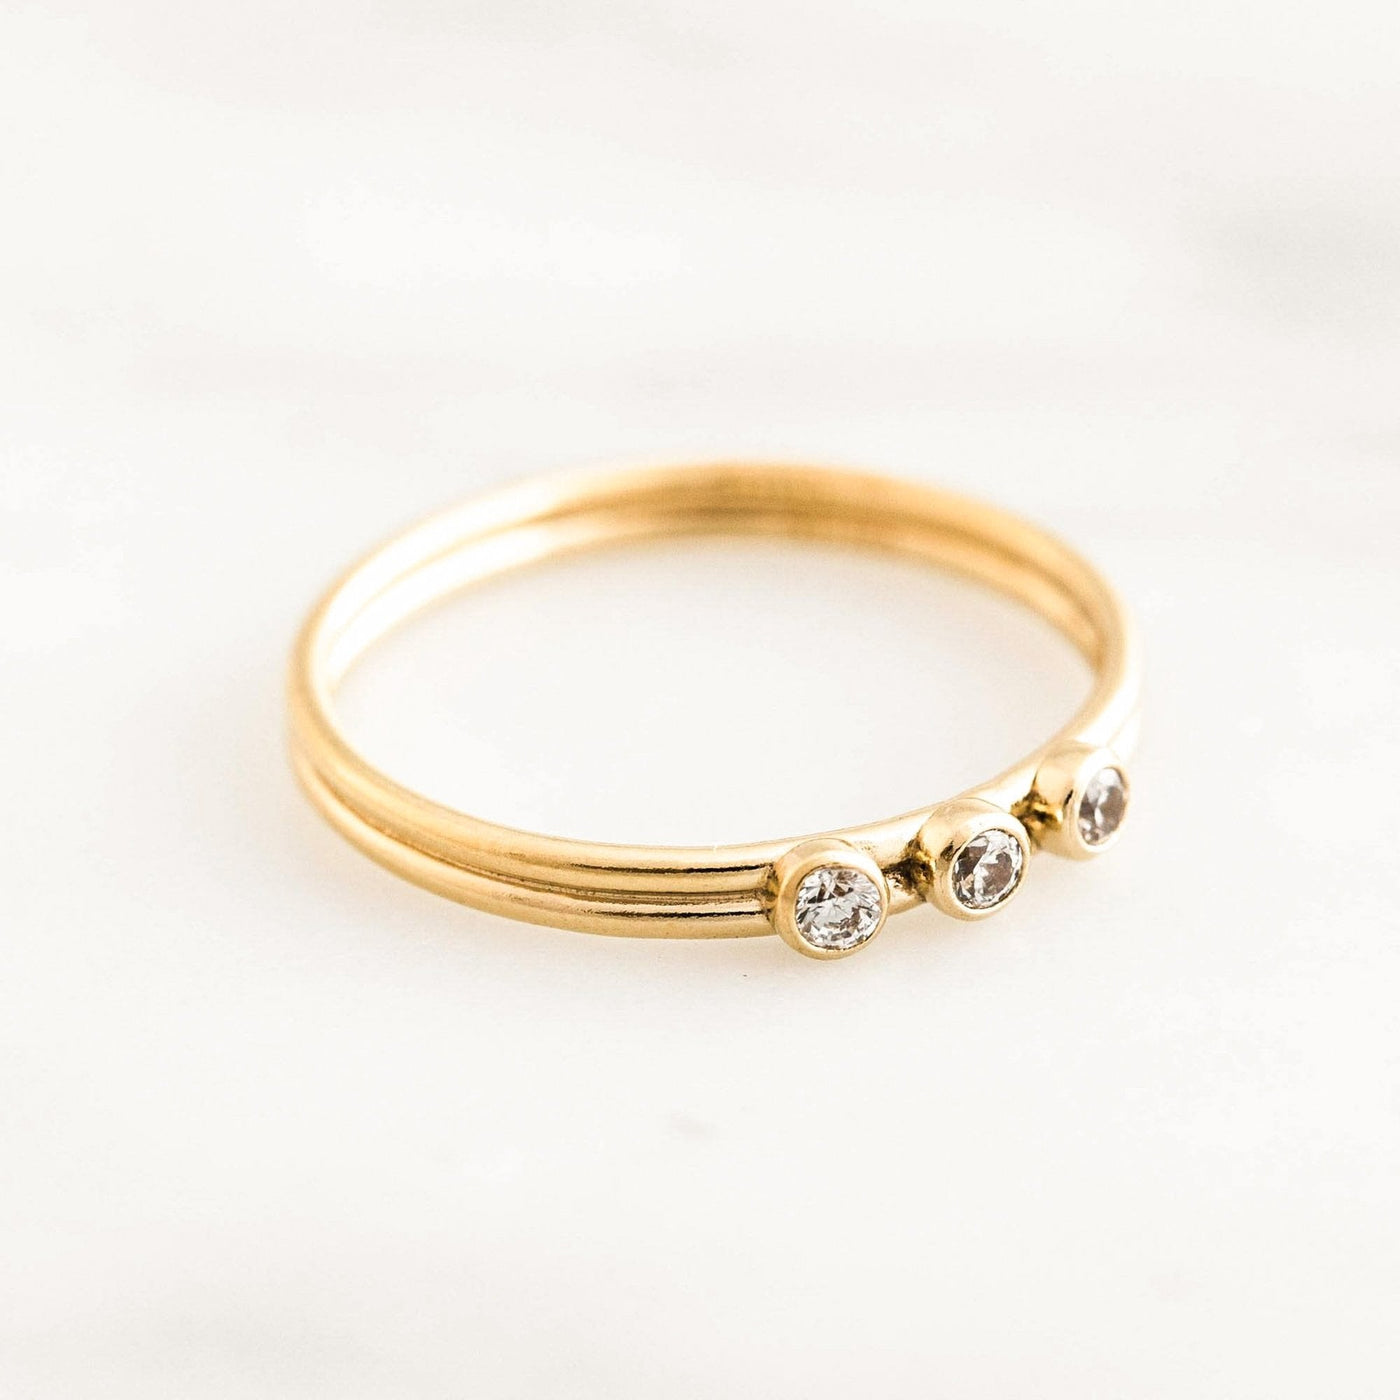 Triple Diamond Ring by Simple & Dainty Jewelry